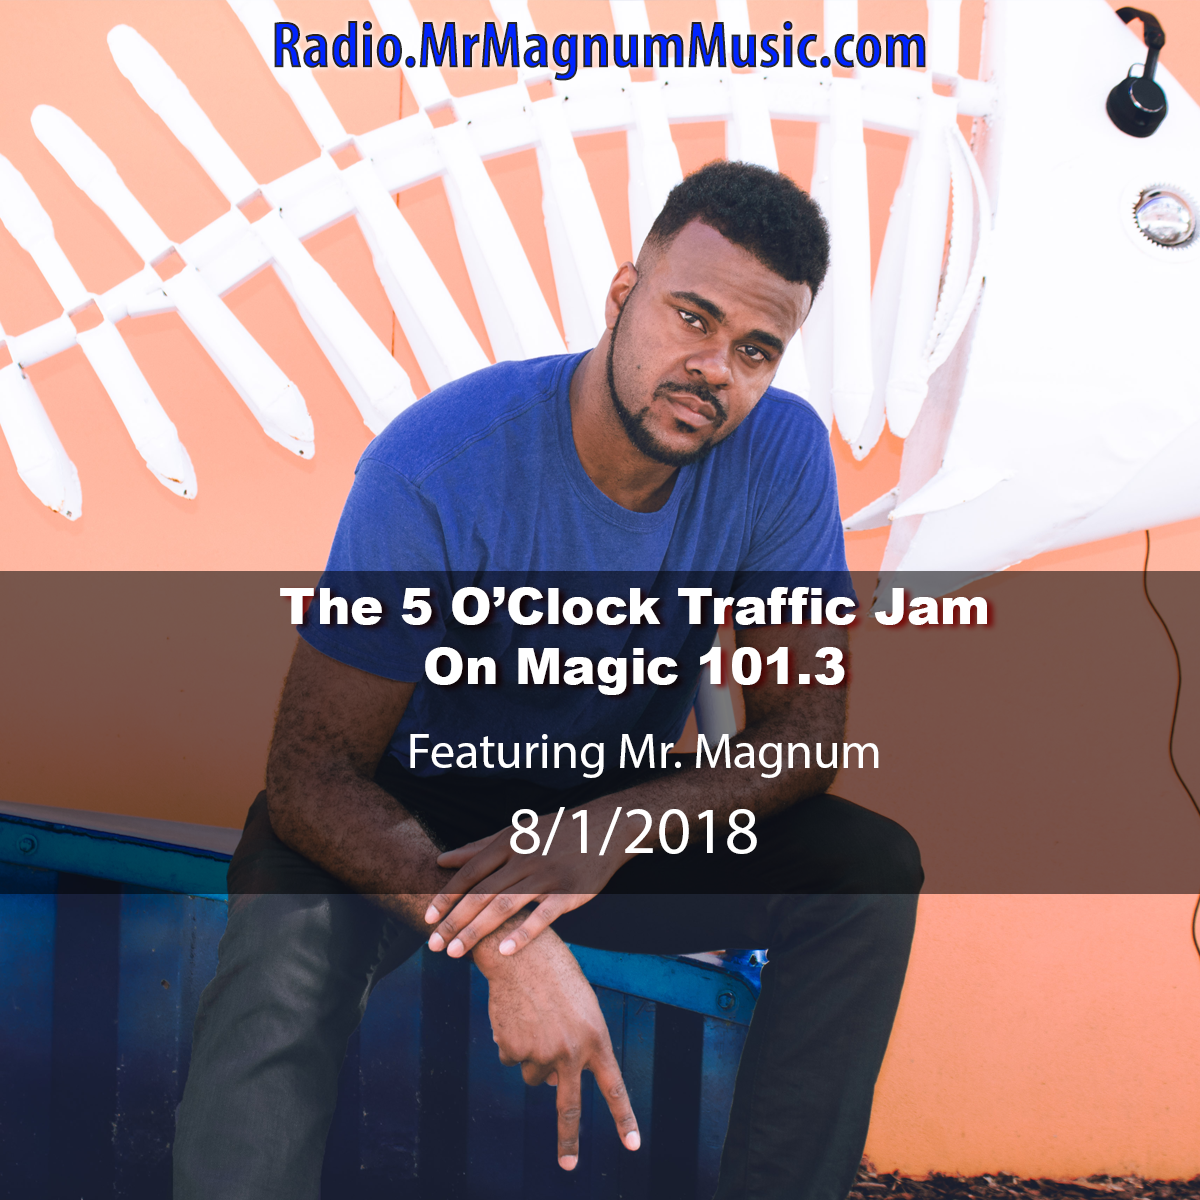 The 5 O'Clock Traffic Jam 20180801 featuring Gainesville's #1 DJ, Mr. Magnum on Magic 101.3